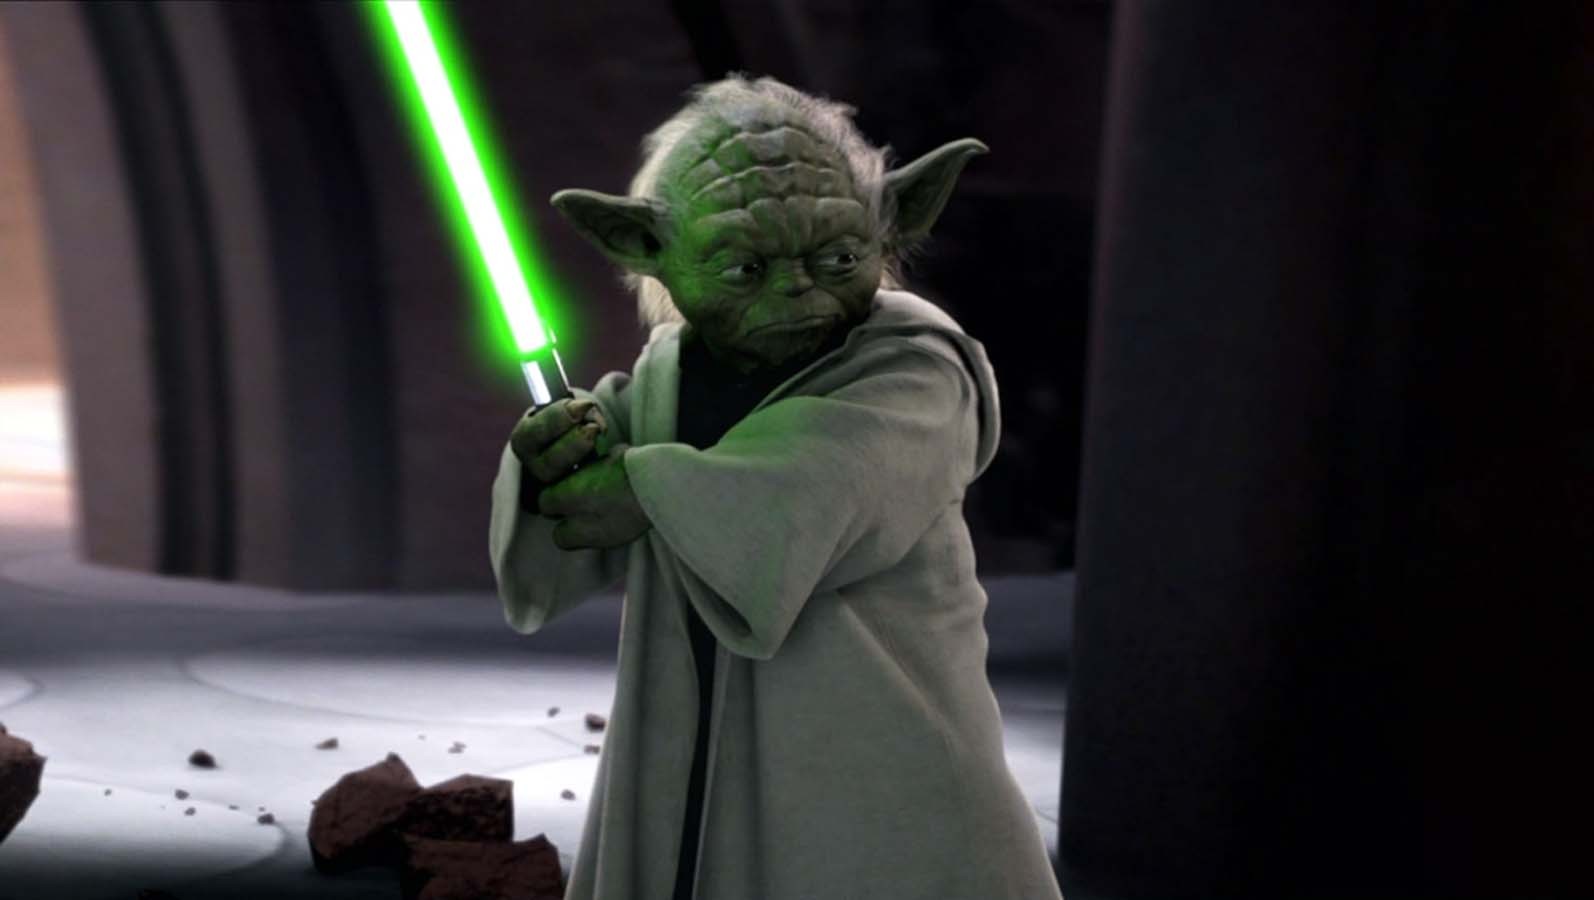 General 1594x900 Star Wars Yoda Jedi Star Wars: Episode II - Attack of the Clones lightsaber CGI film stills science fiction movies